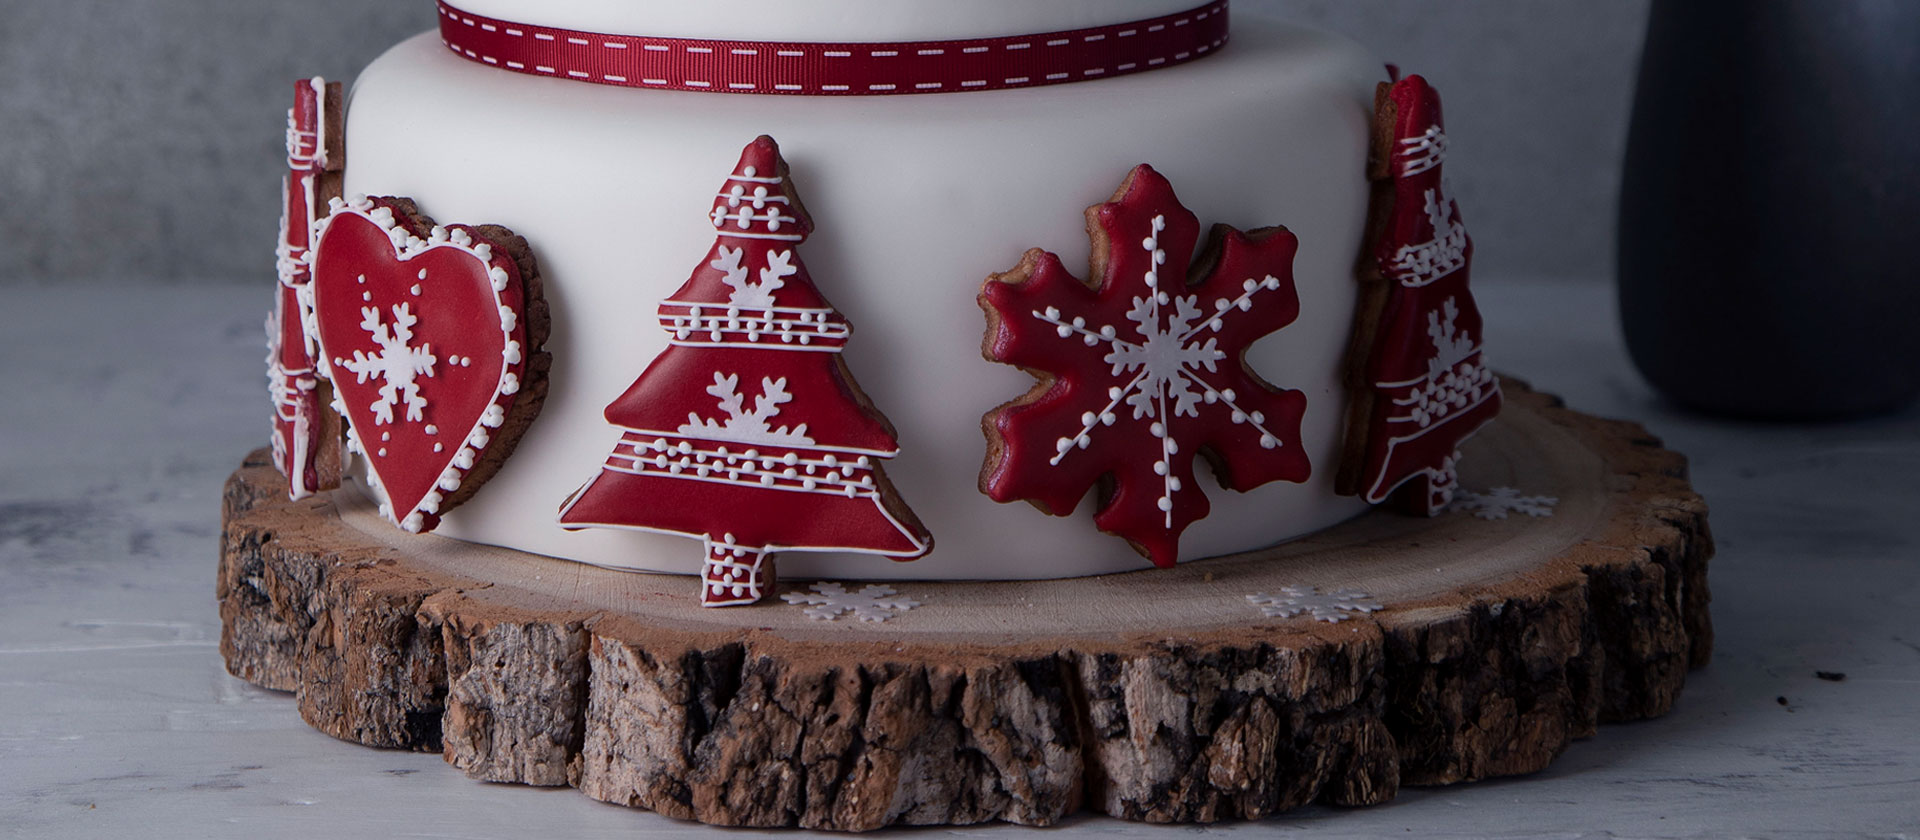 Scandinavian Christmas Cake